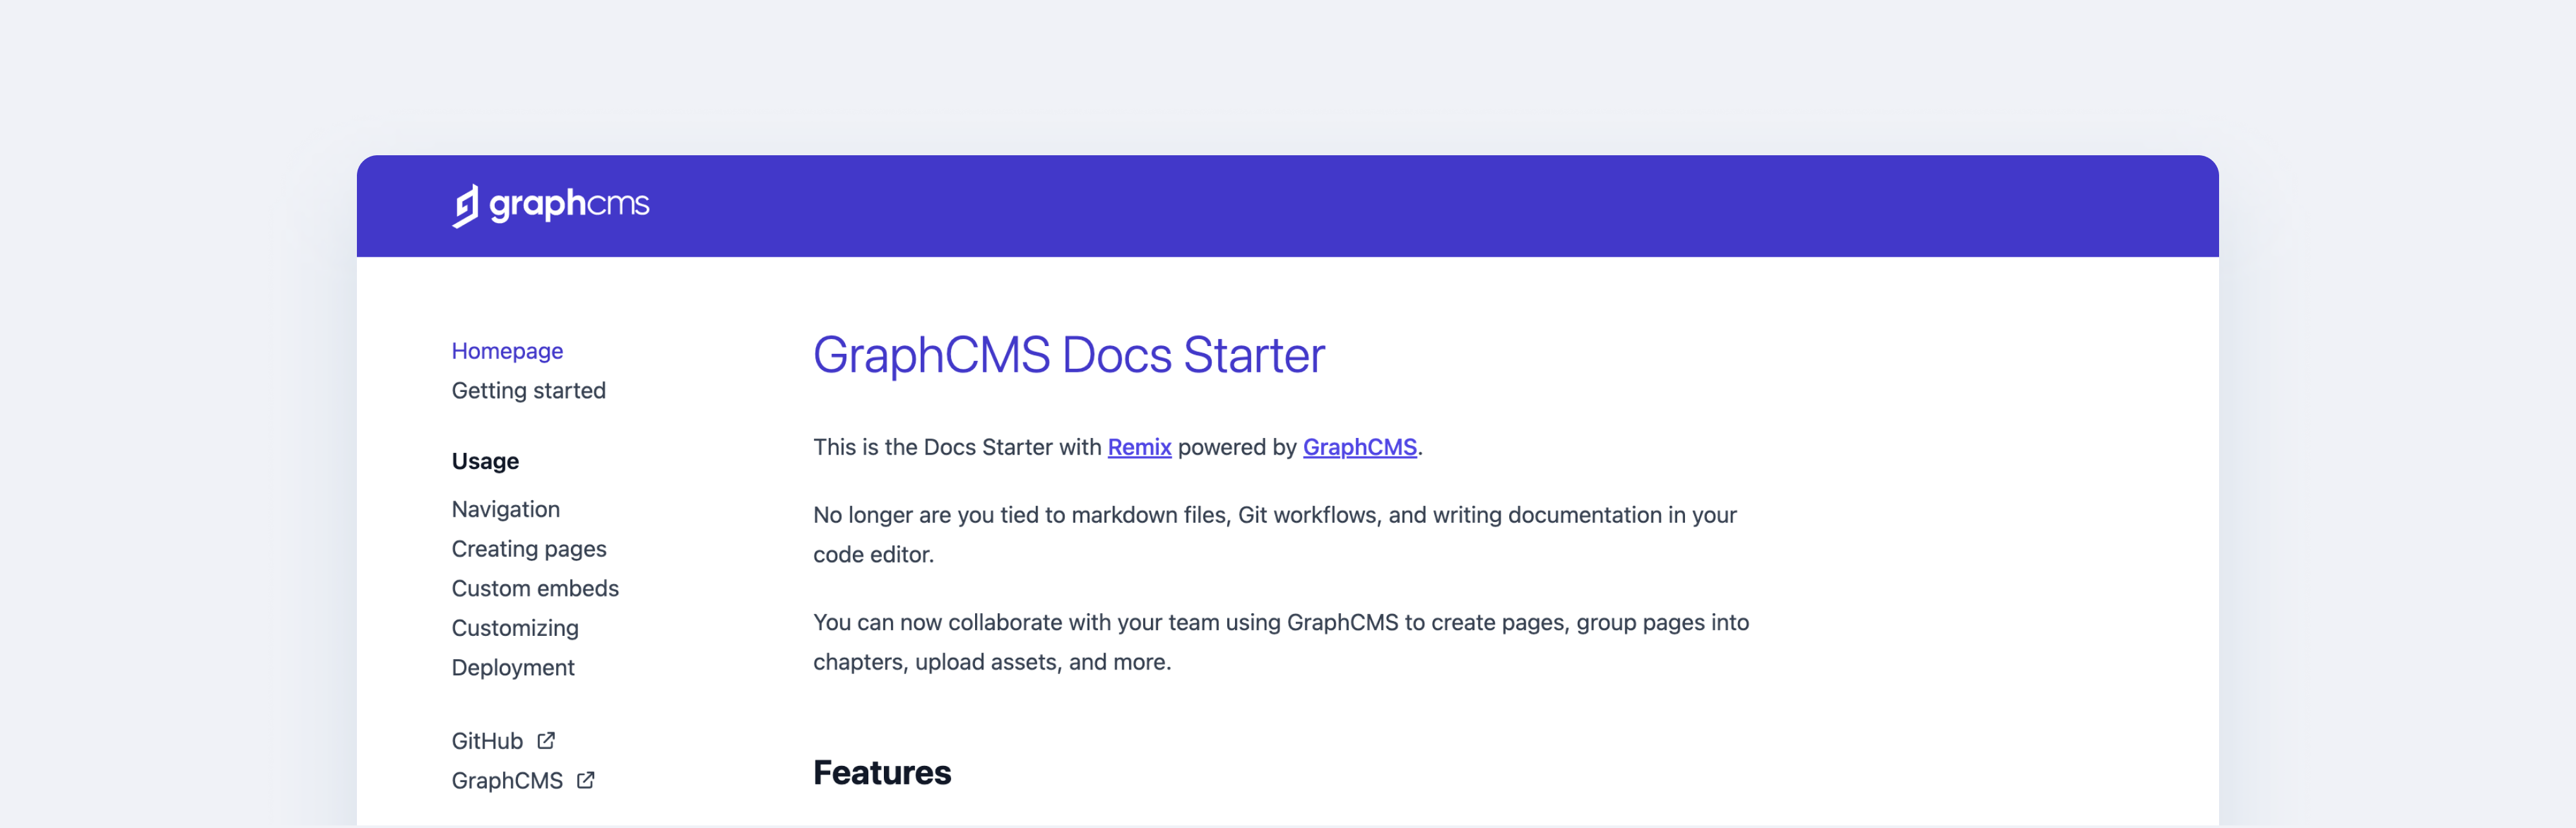 GraphCMS Docs Starter Preview